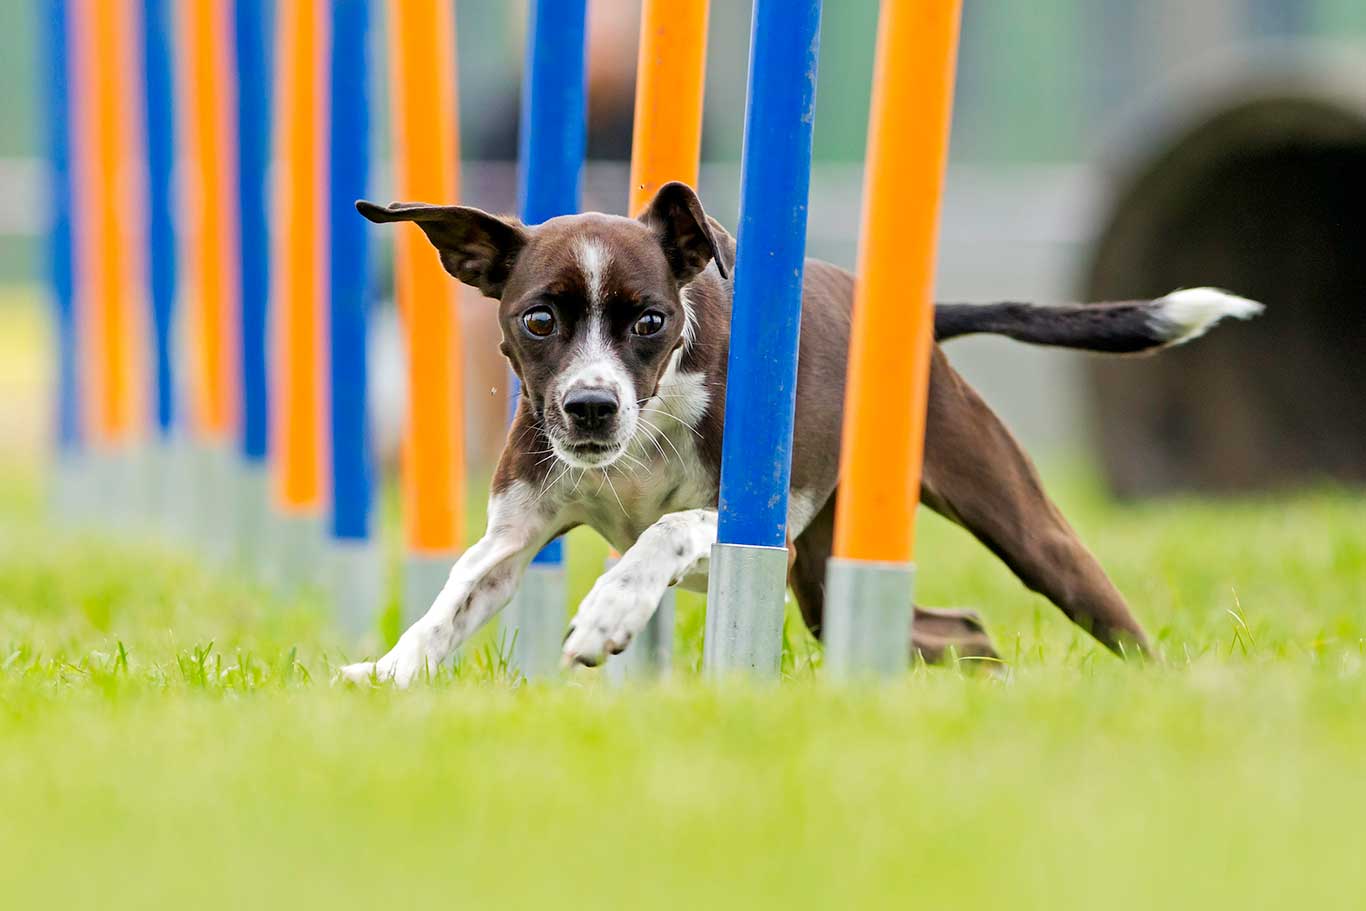 Puppy running around training cones